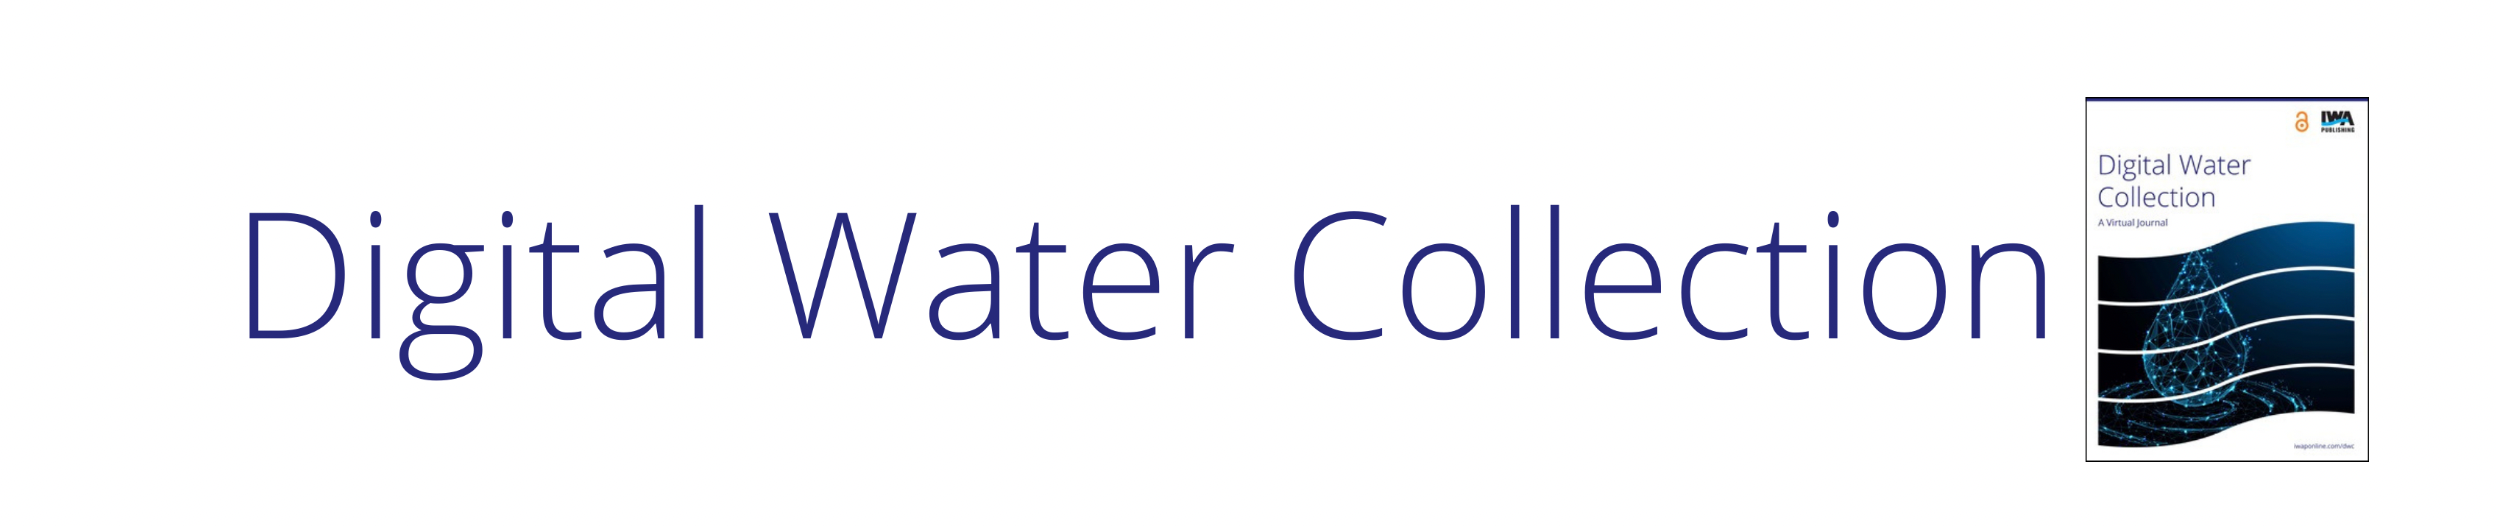 Digital Water Collection | IWA Publishing